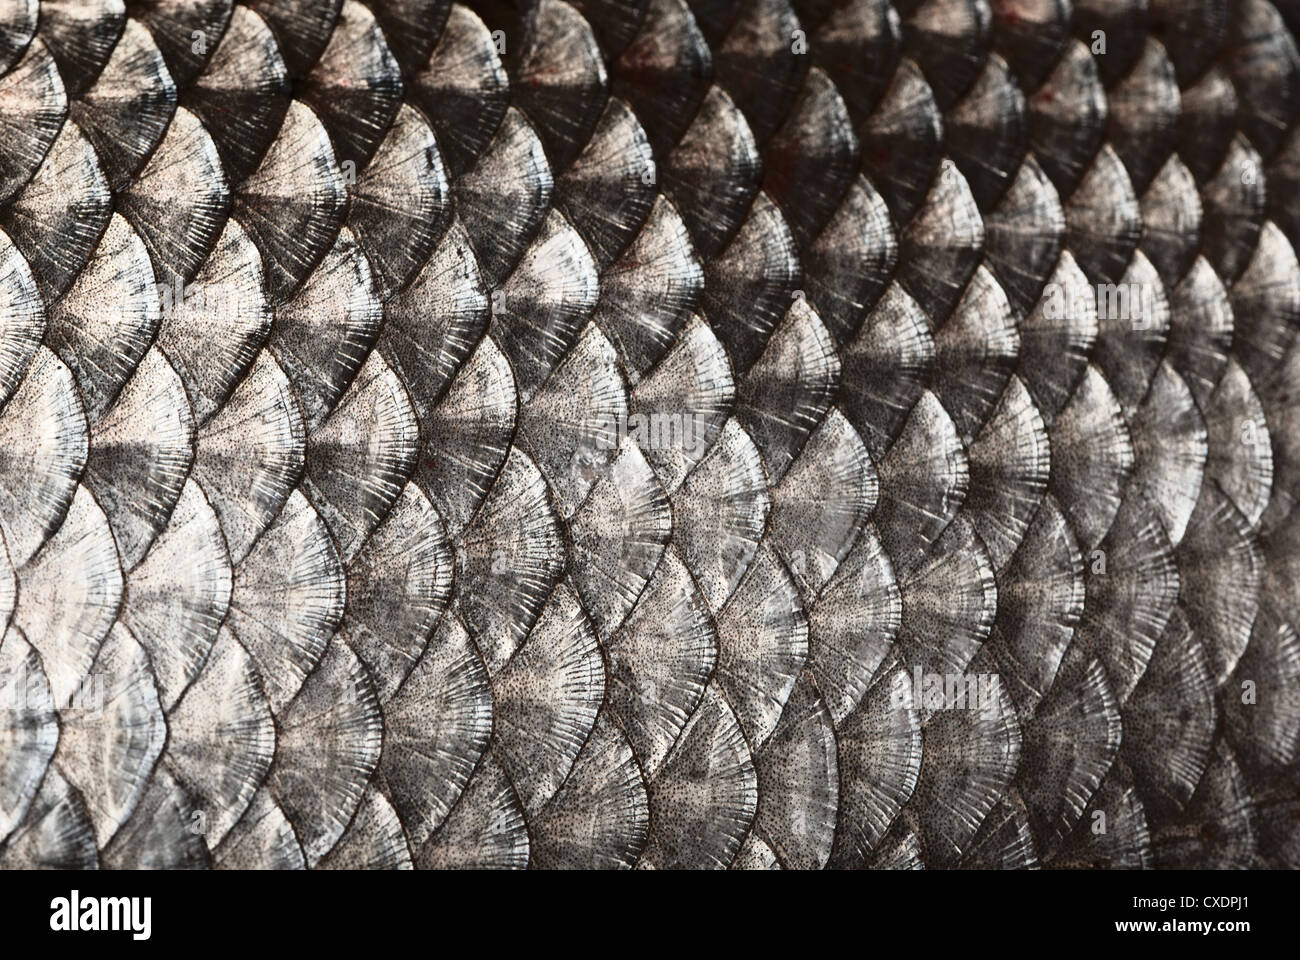 Escamas de pescado fotografías e imágenes de alta resolución - Alamy